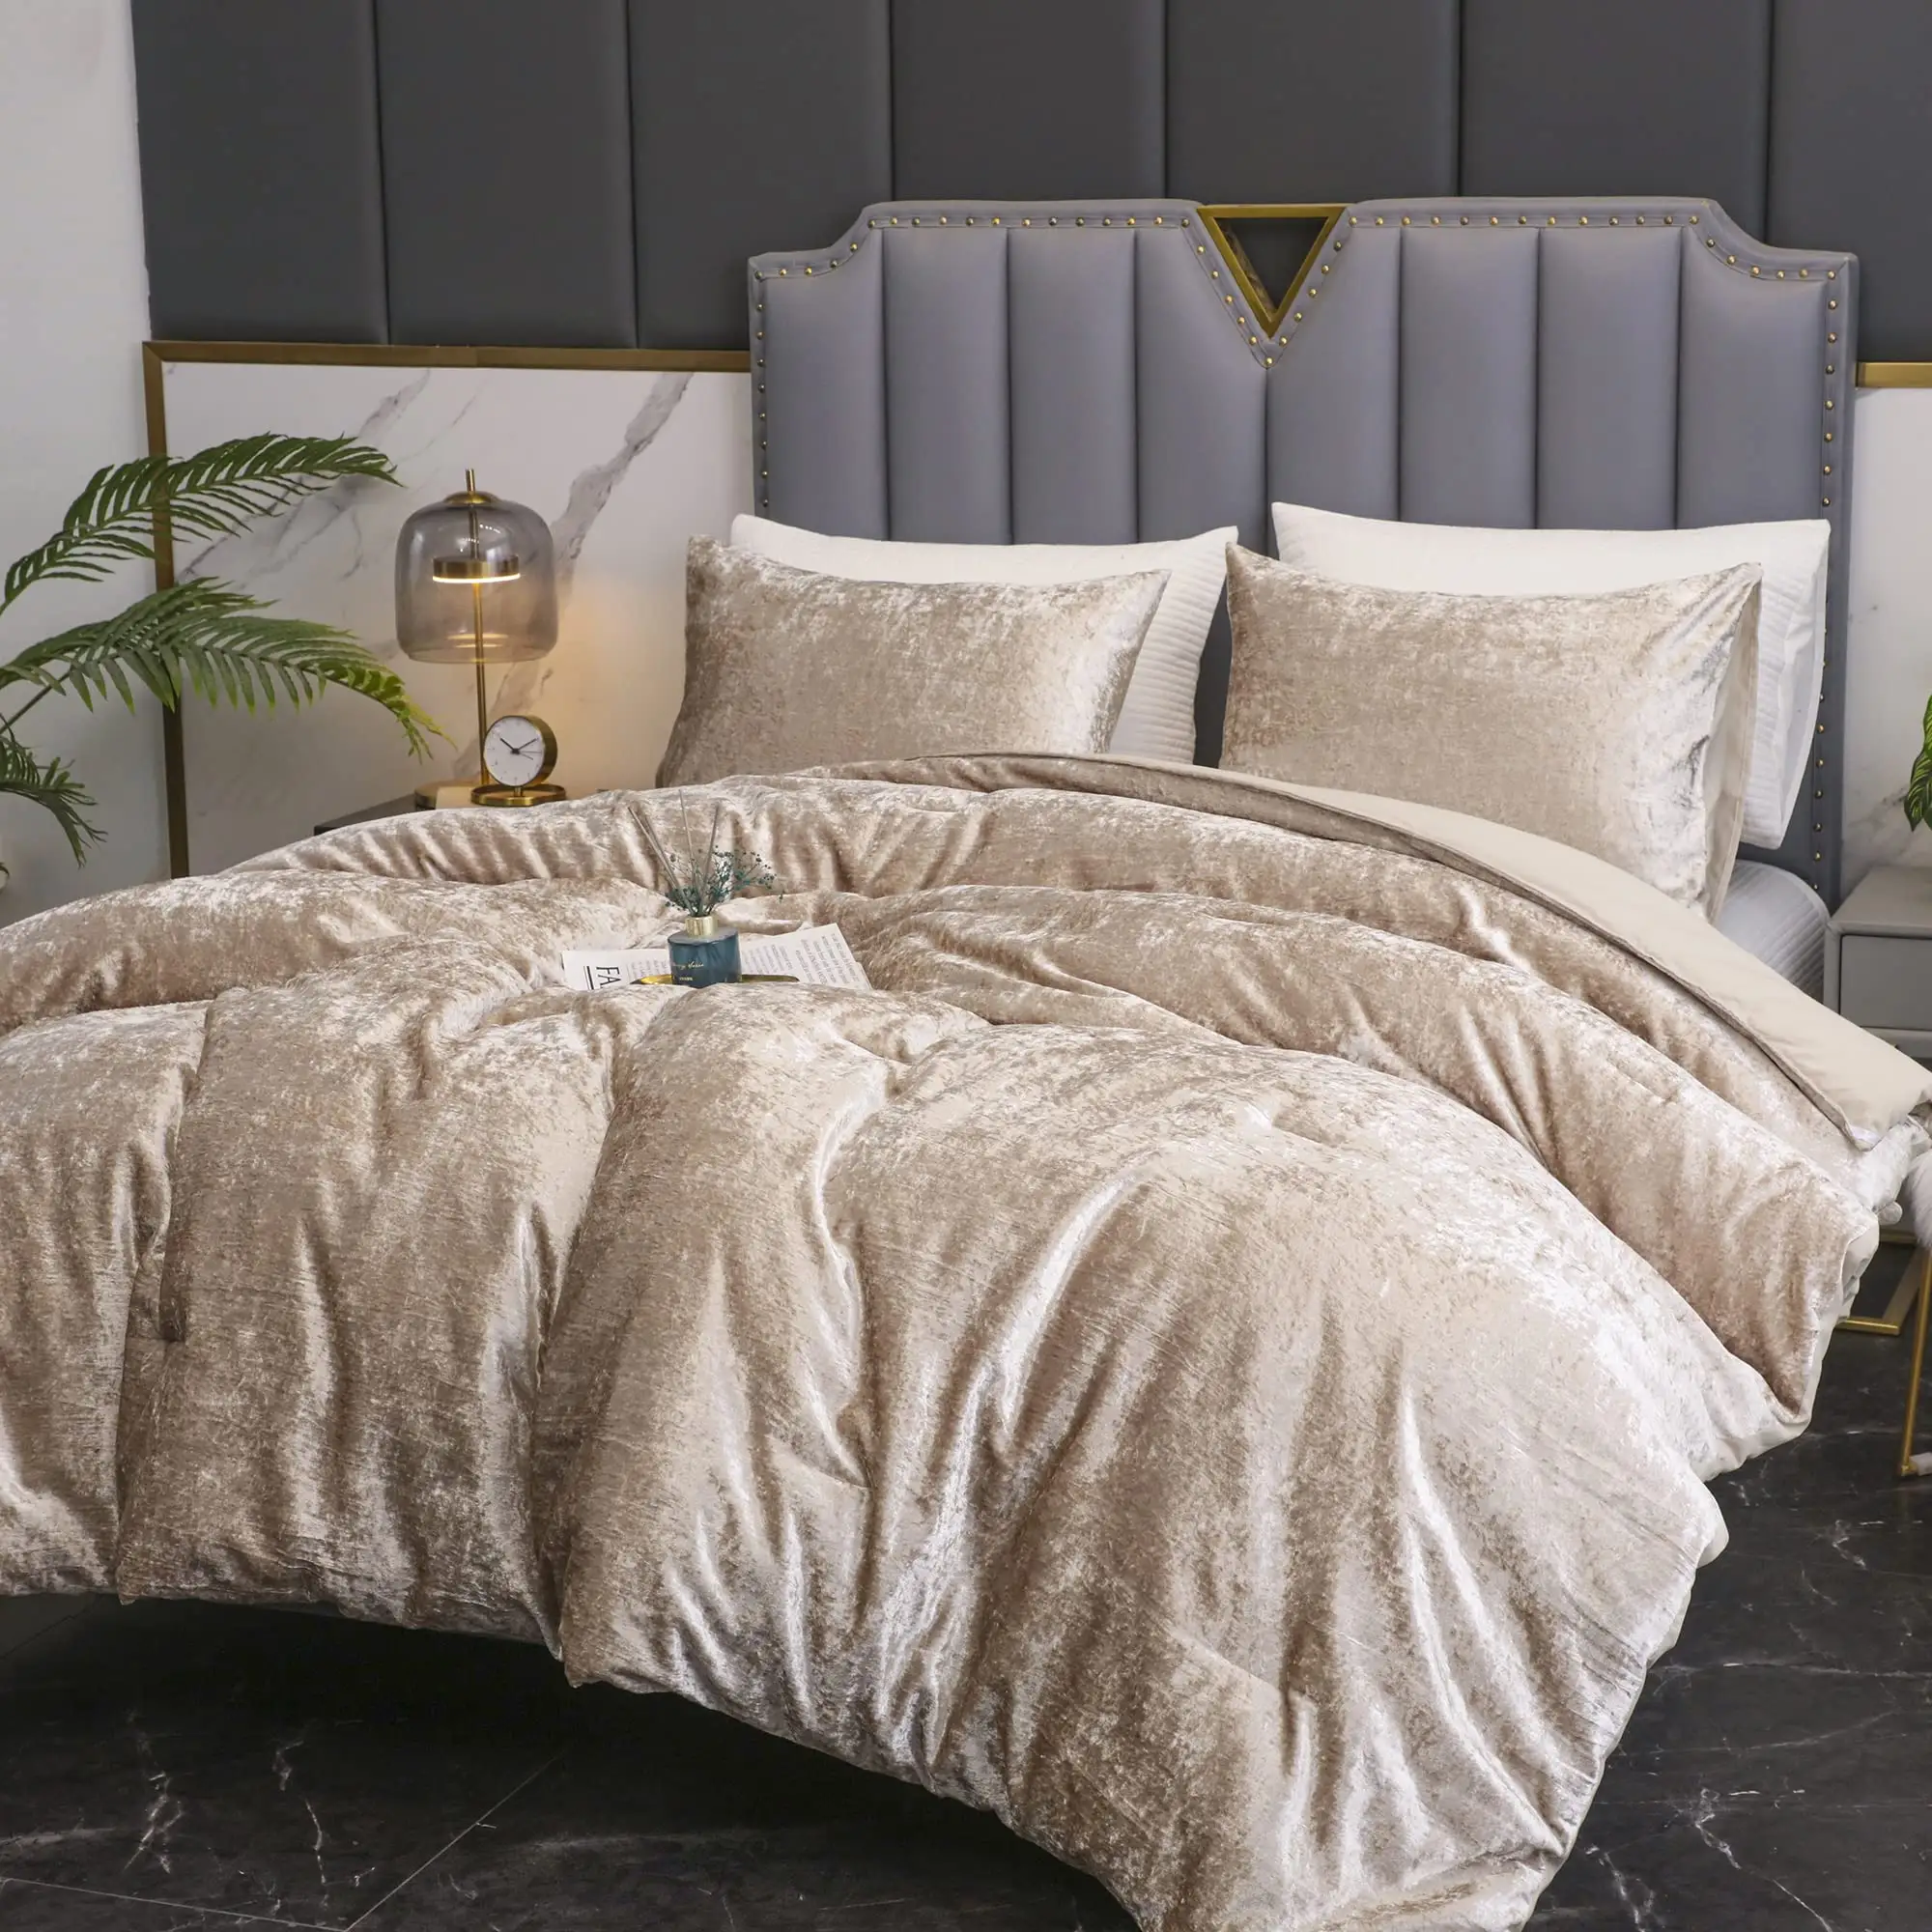 King Queen Size Bed Sheets Velvet Comforter Quilt duvet Cover 4 6 7 pieces Set Textured Pillowcases Microfiber Bedding Set